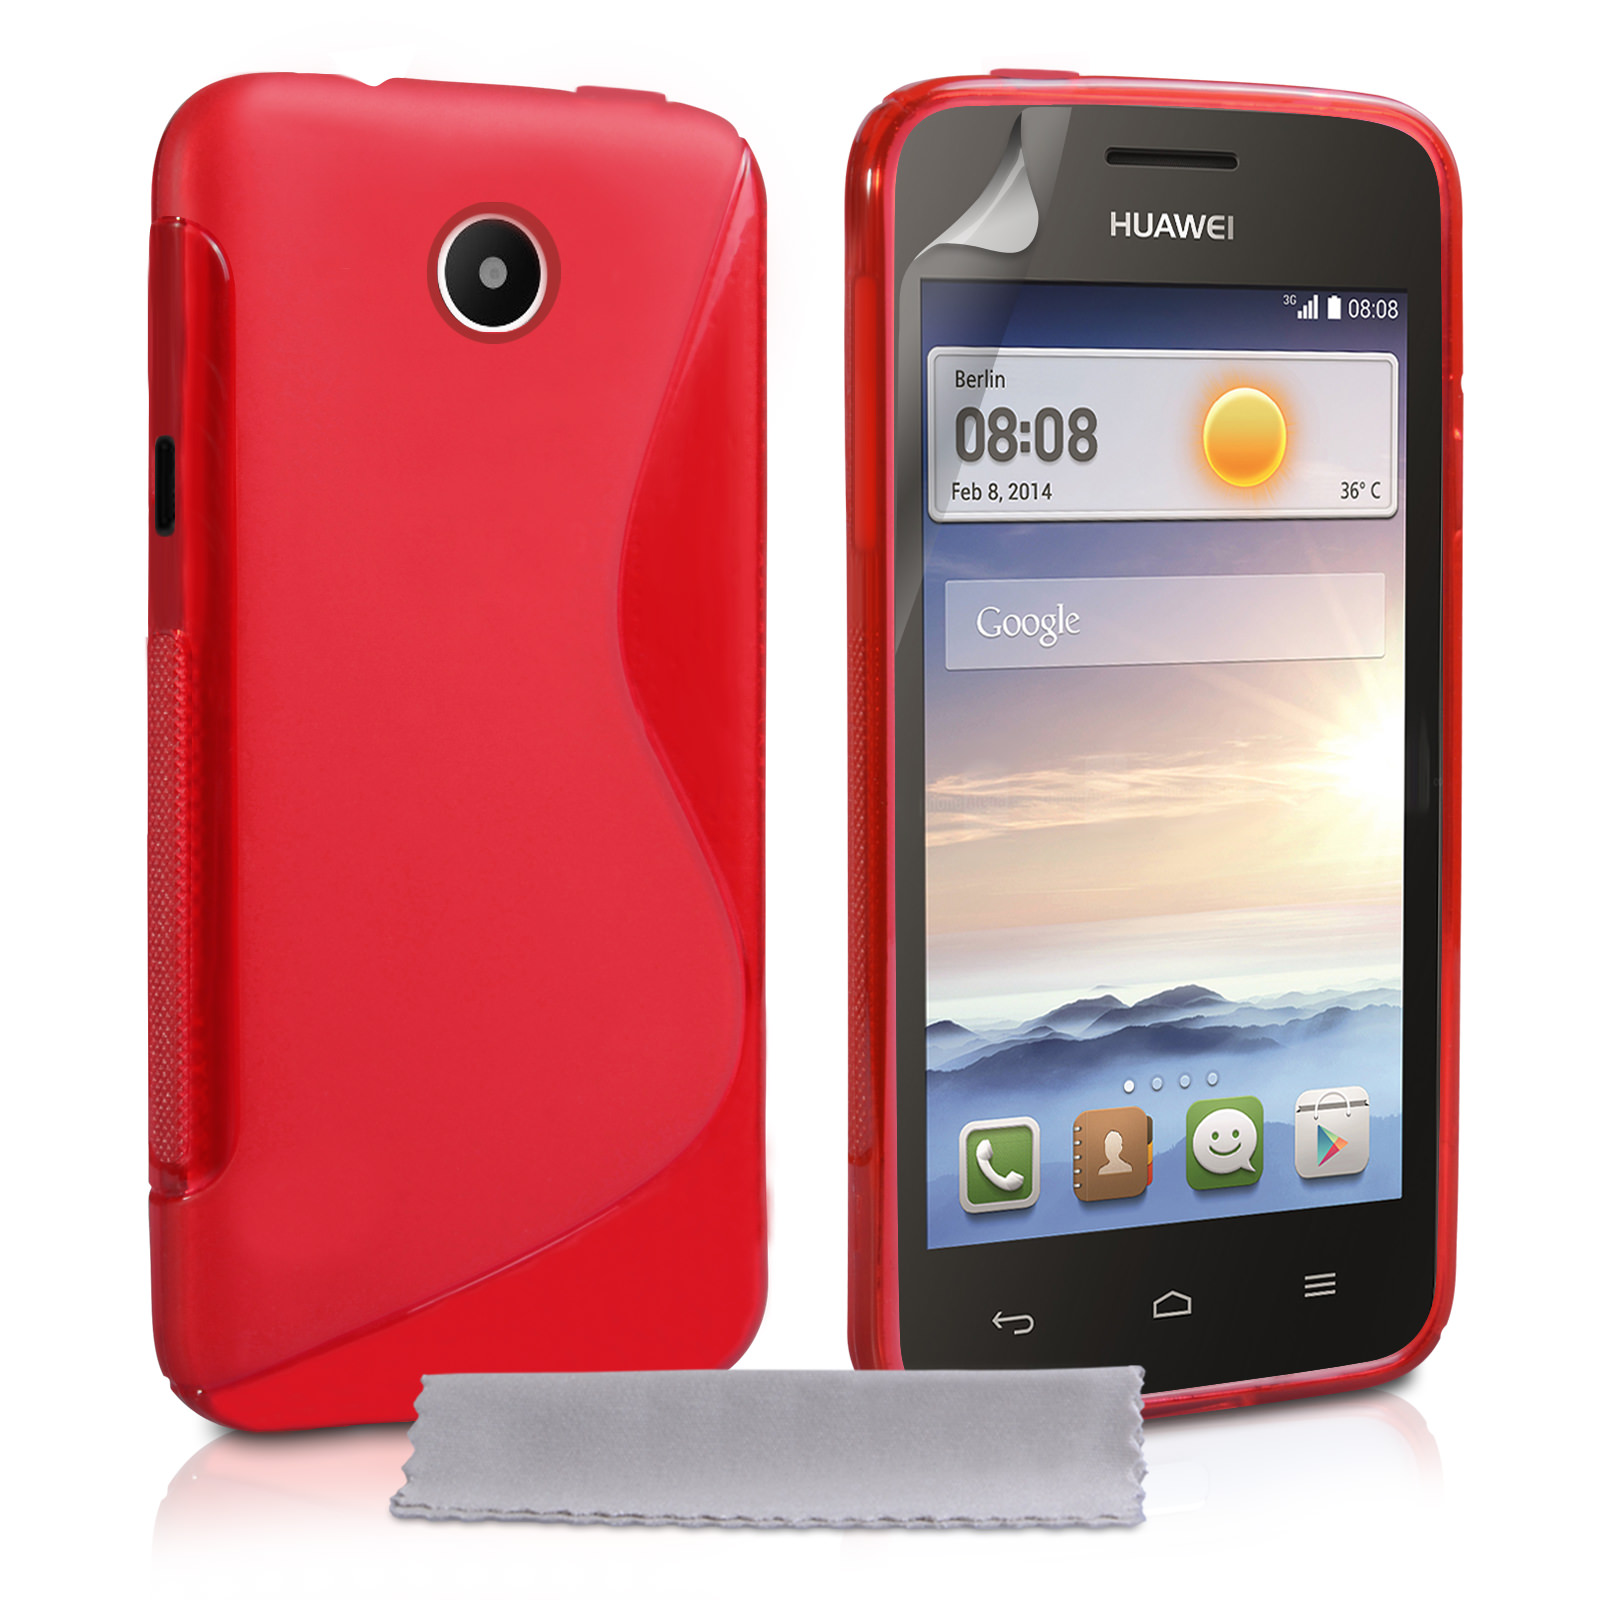 Caseflex Huawei Ascend Y330 Silicone Gel S-Line Case - Red